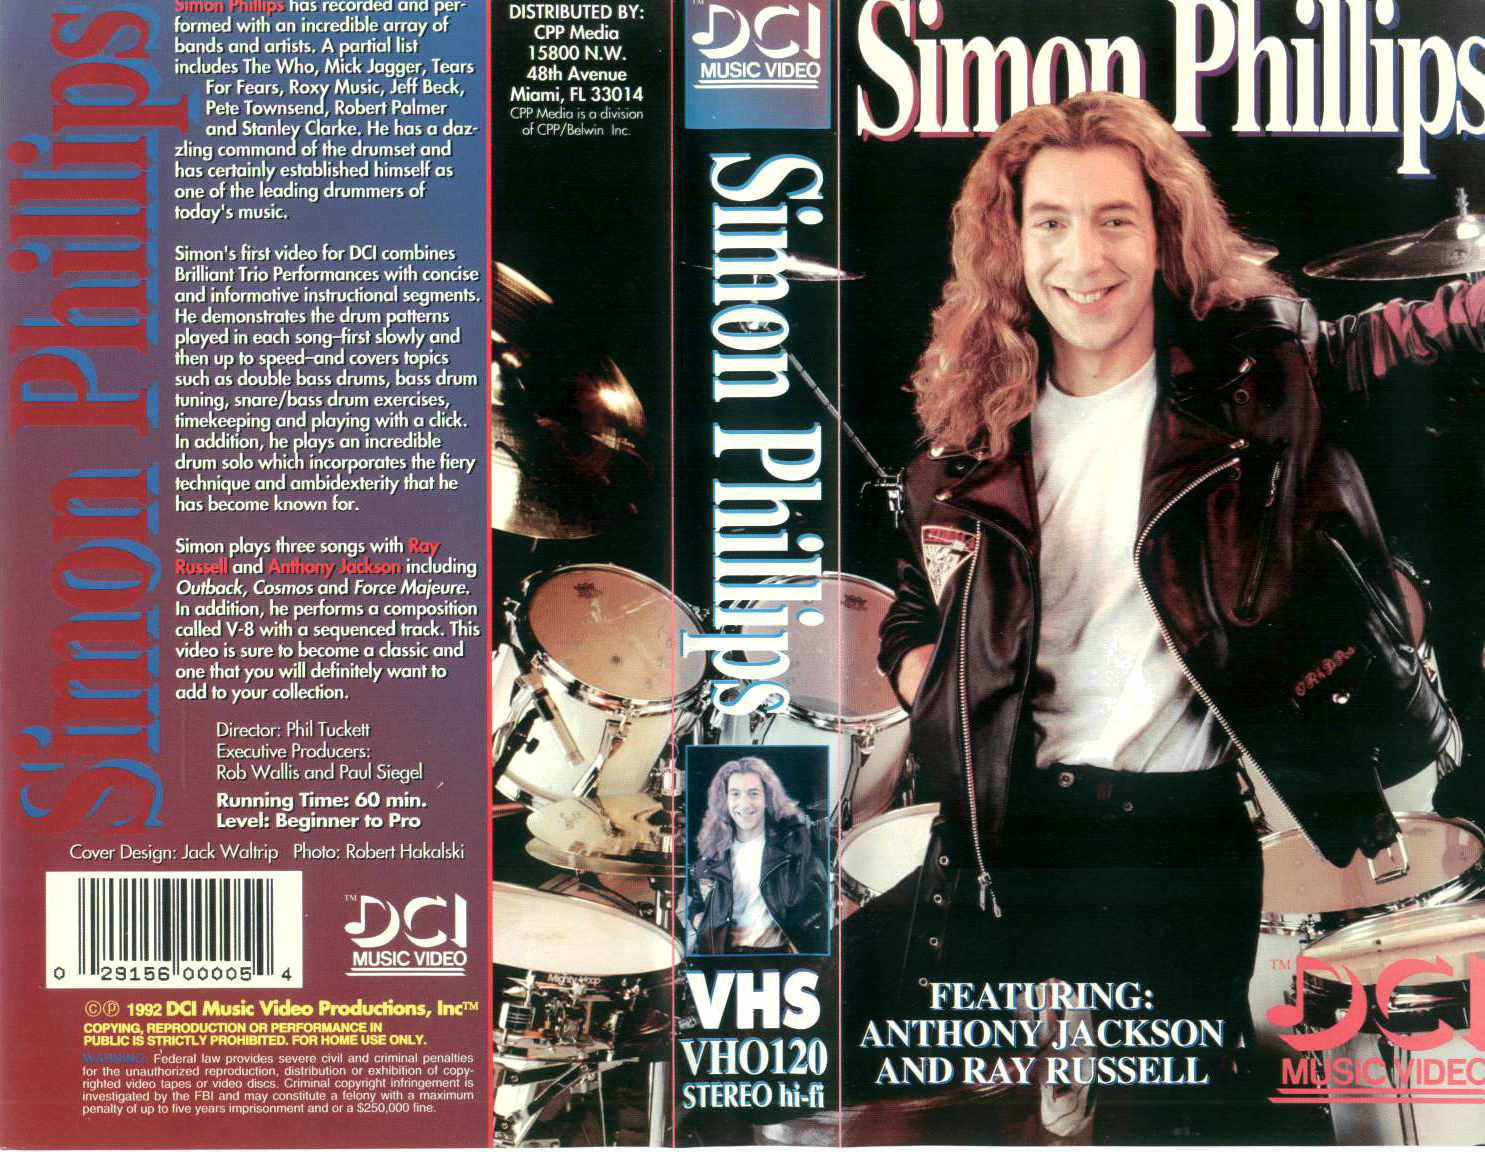 S. Phillips / videocassetta VHS